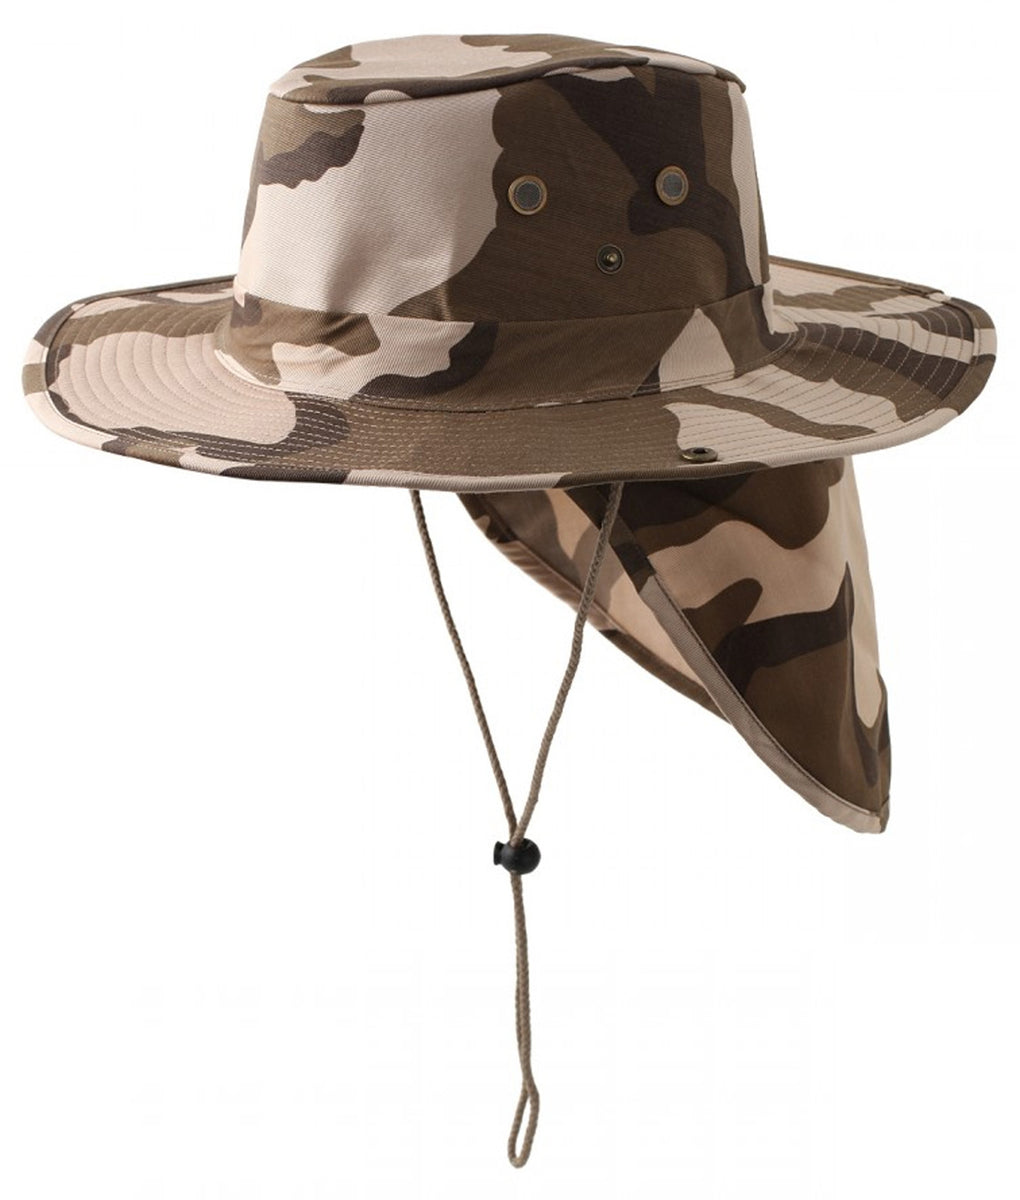 Safari Boonie Fishing Sun Hat Cotton Blend - Desert Camouflage